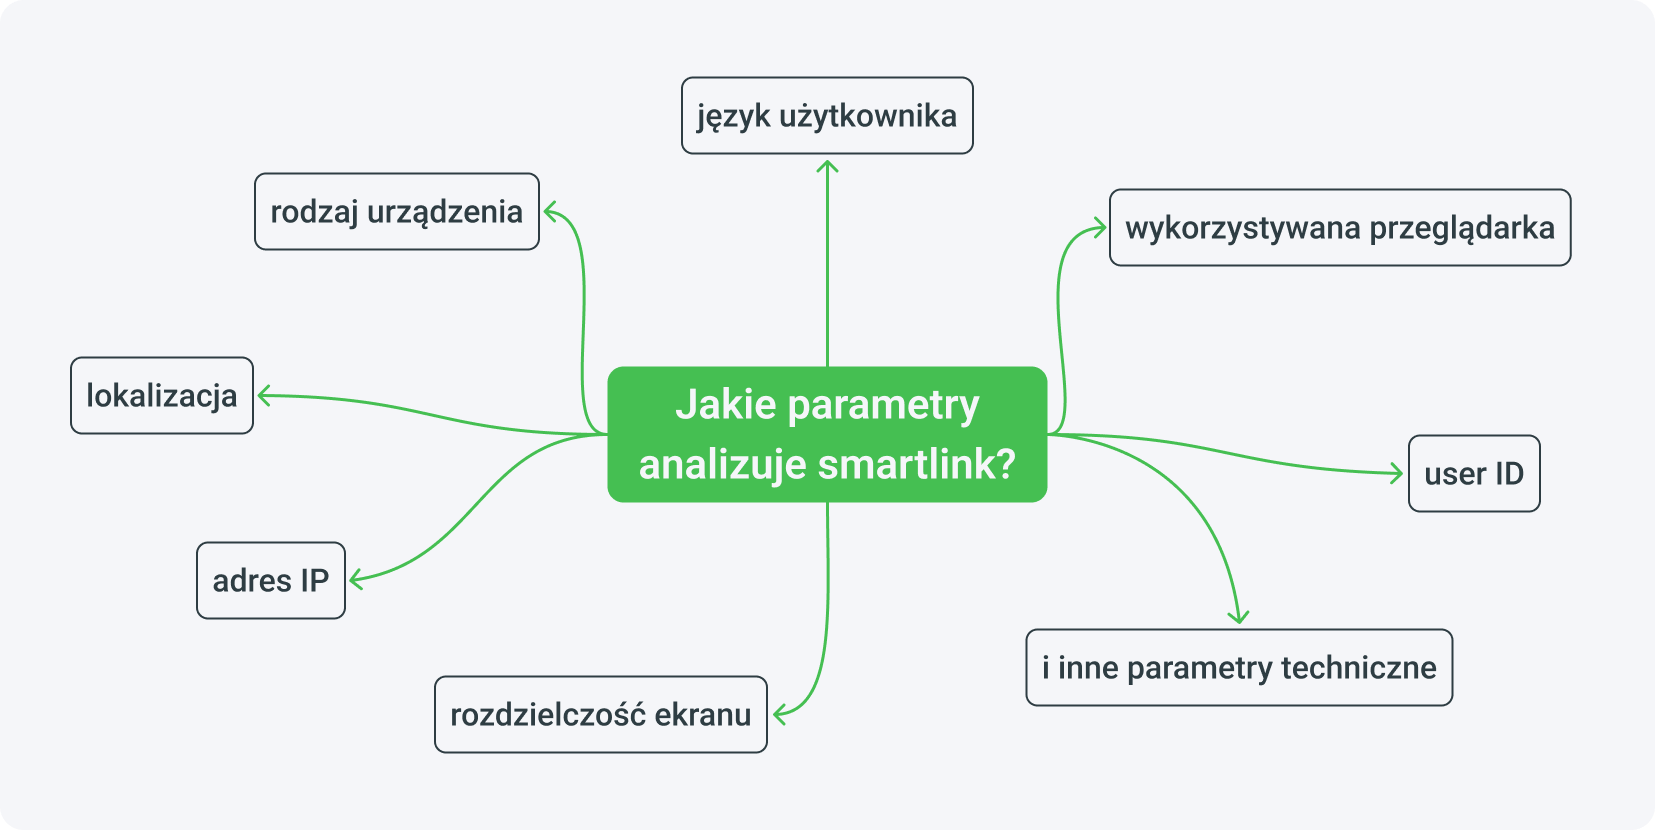 Jakie parametry analizuje smartlink?